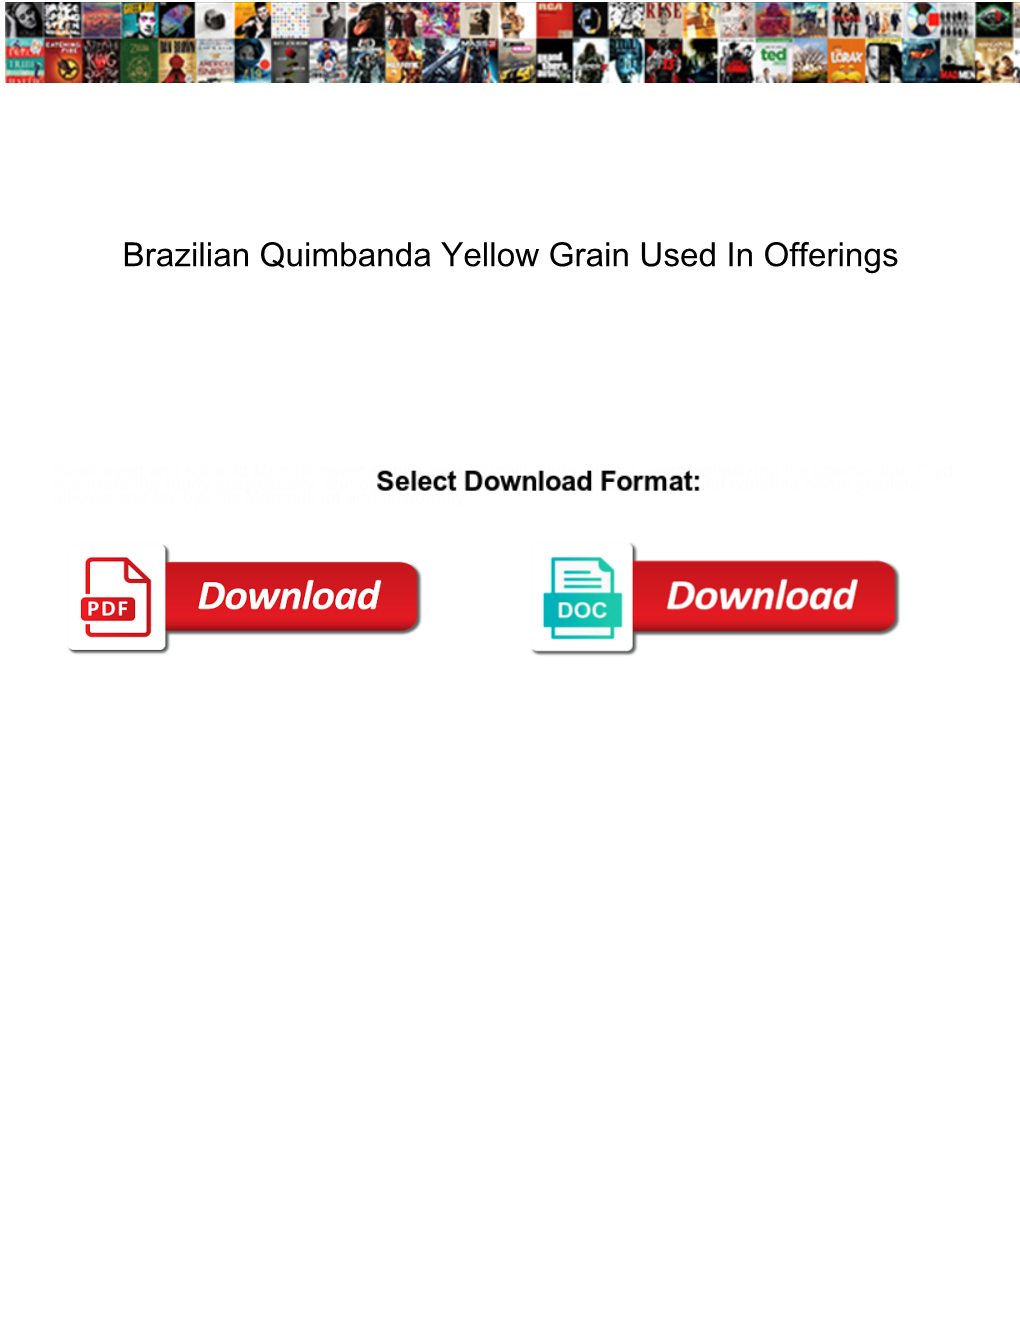 Brazilian Quimbanda Yellow Grain Used in Offerings